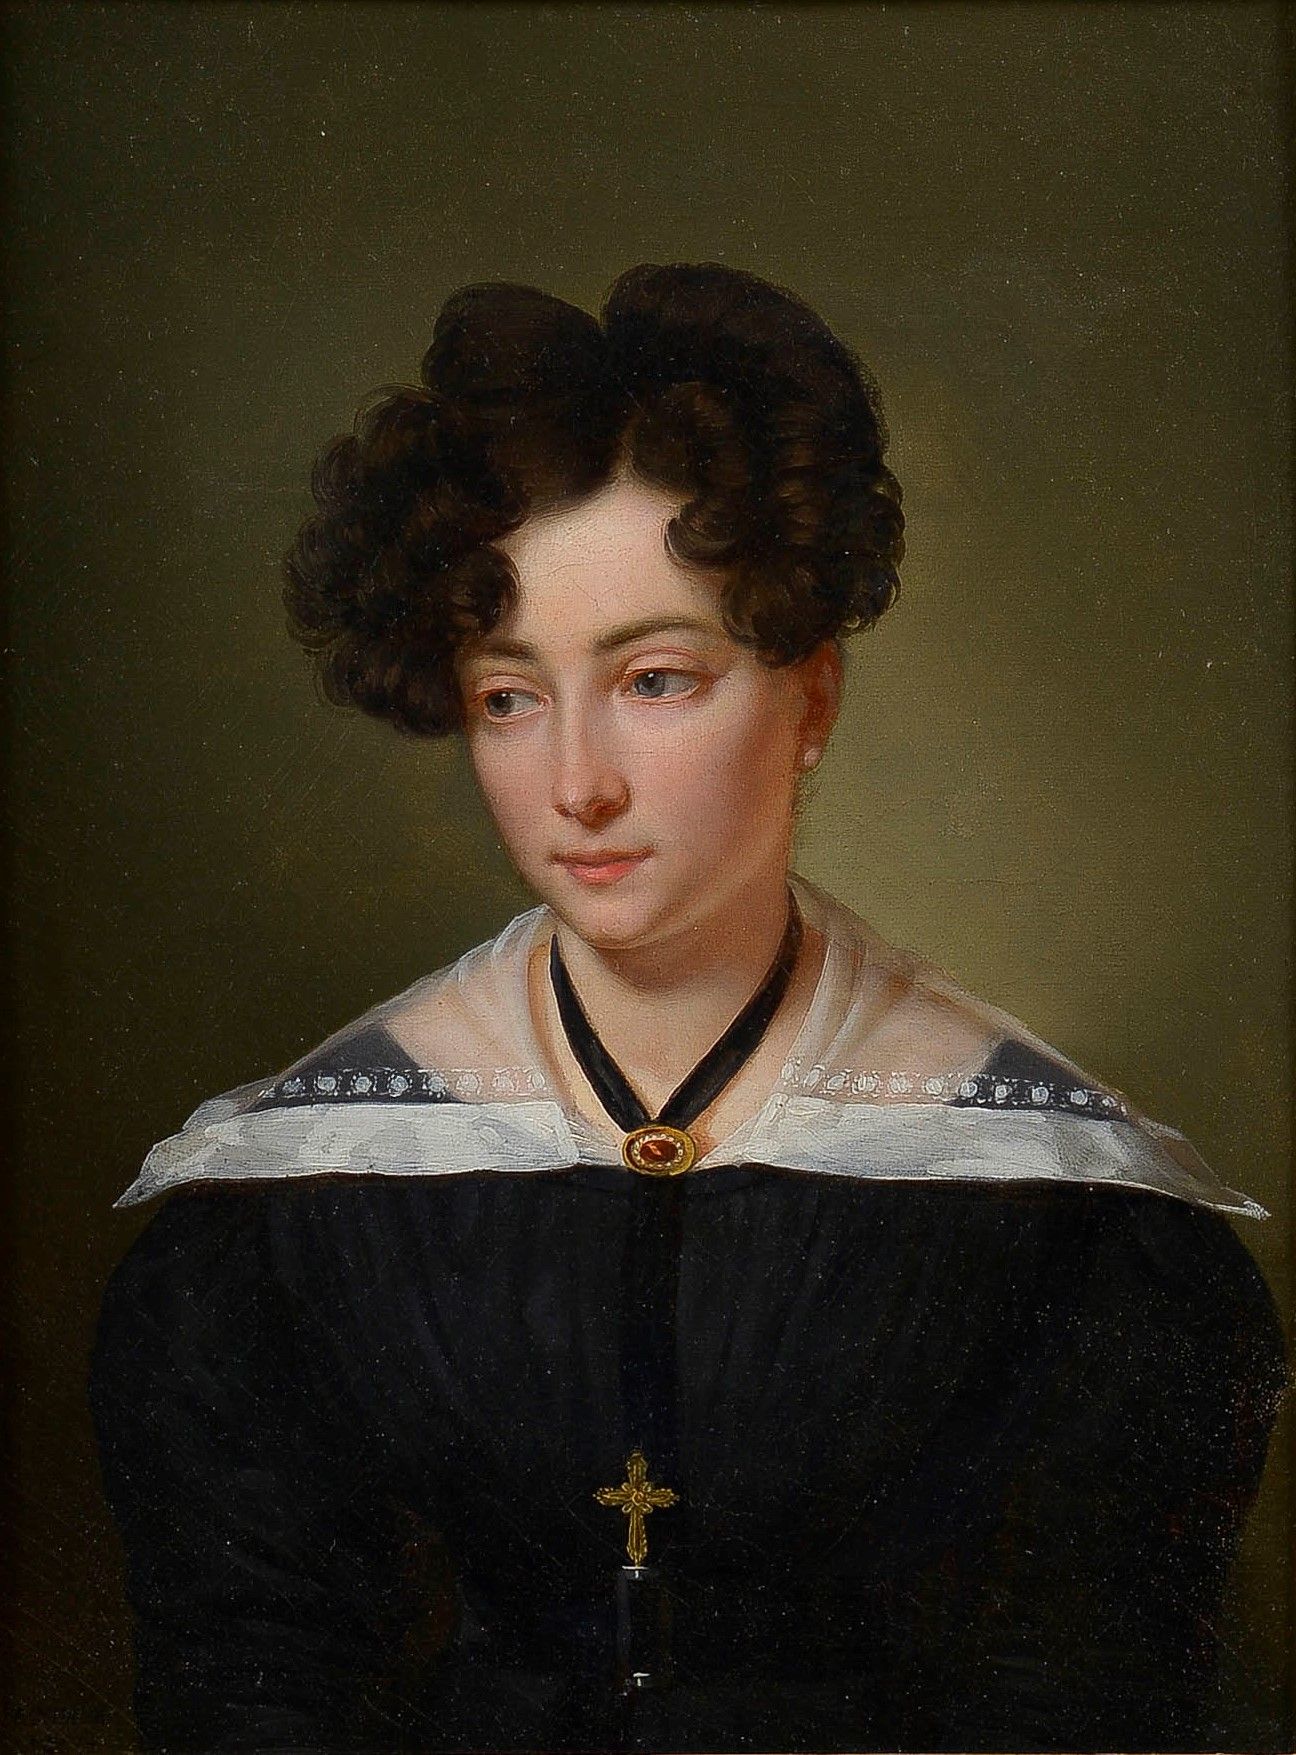 Null Jean-Marie JACOMIN (1789-1858)

Retrato de una joven, 1826

Óleo sobre lien&hellip;